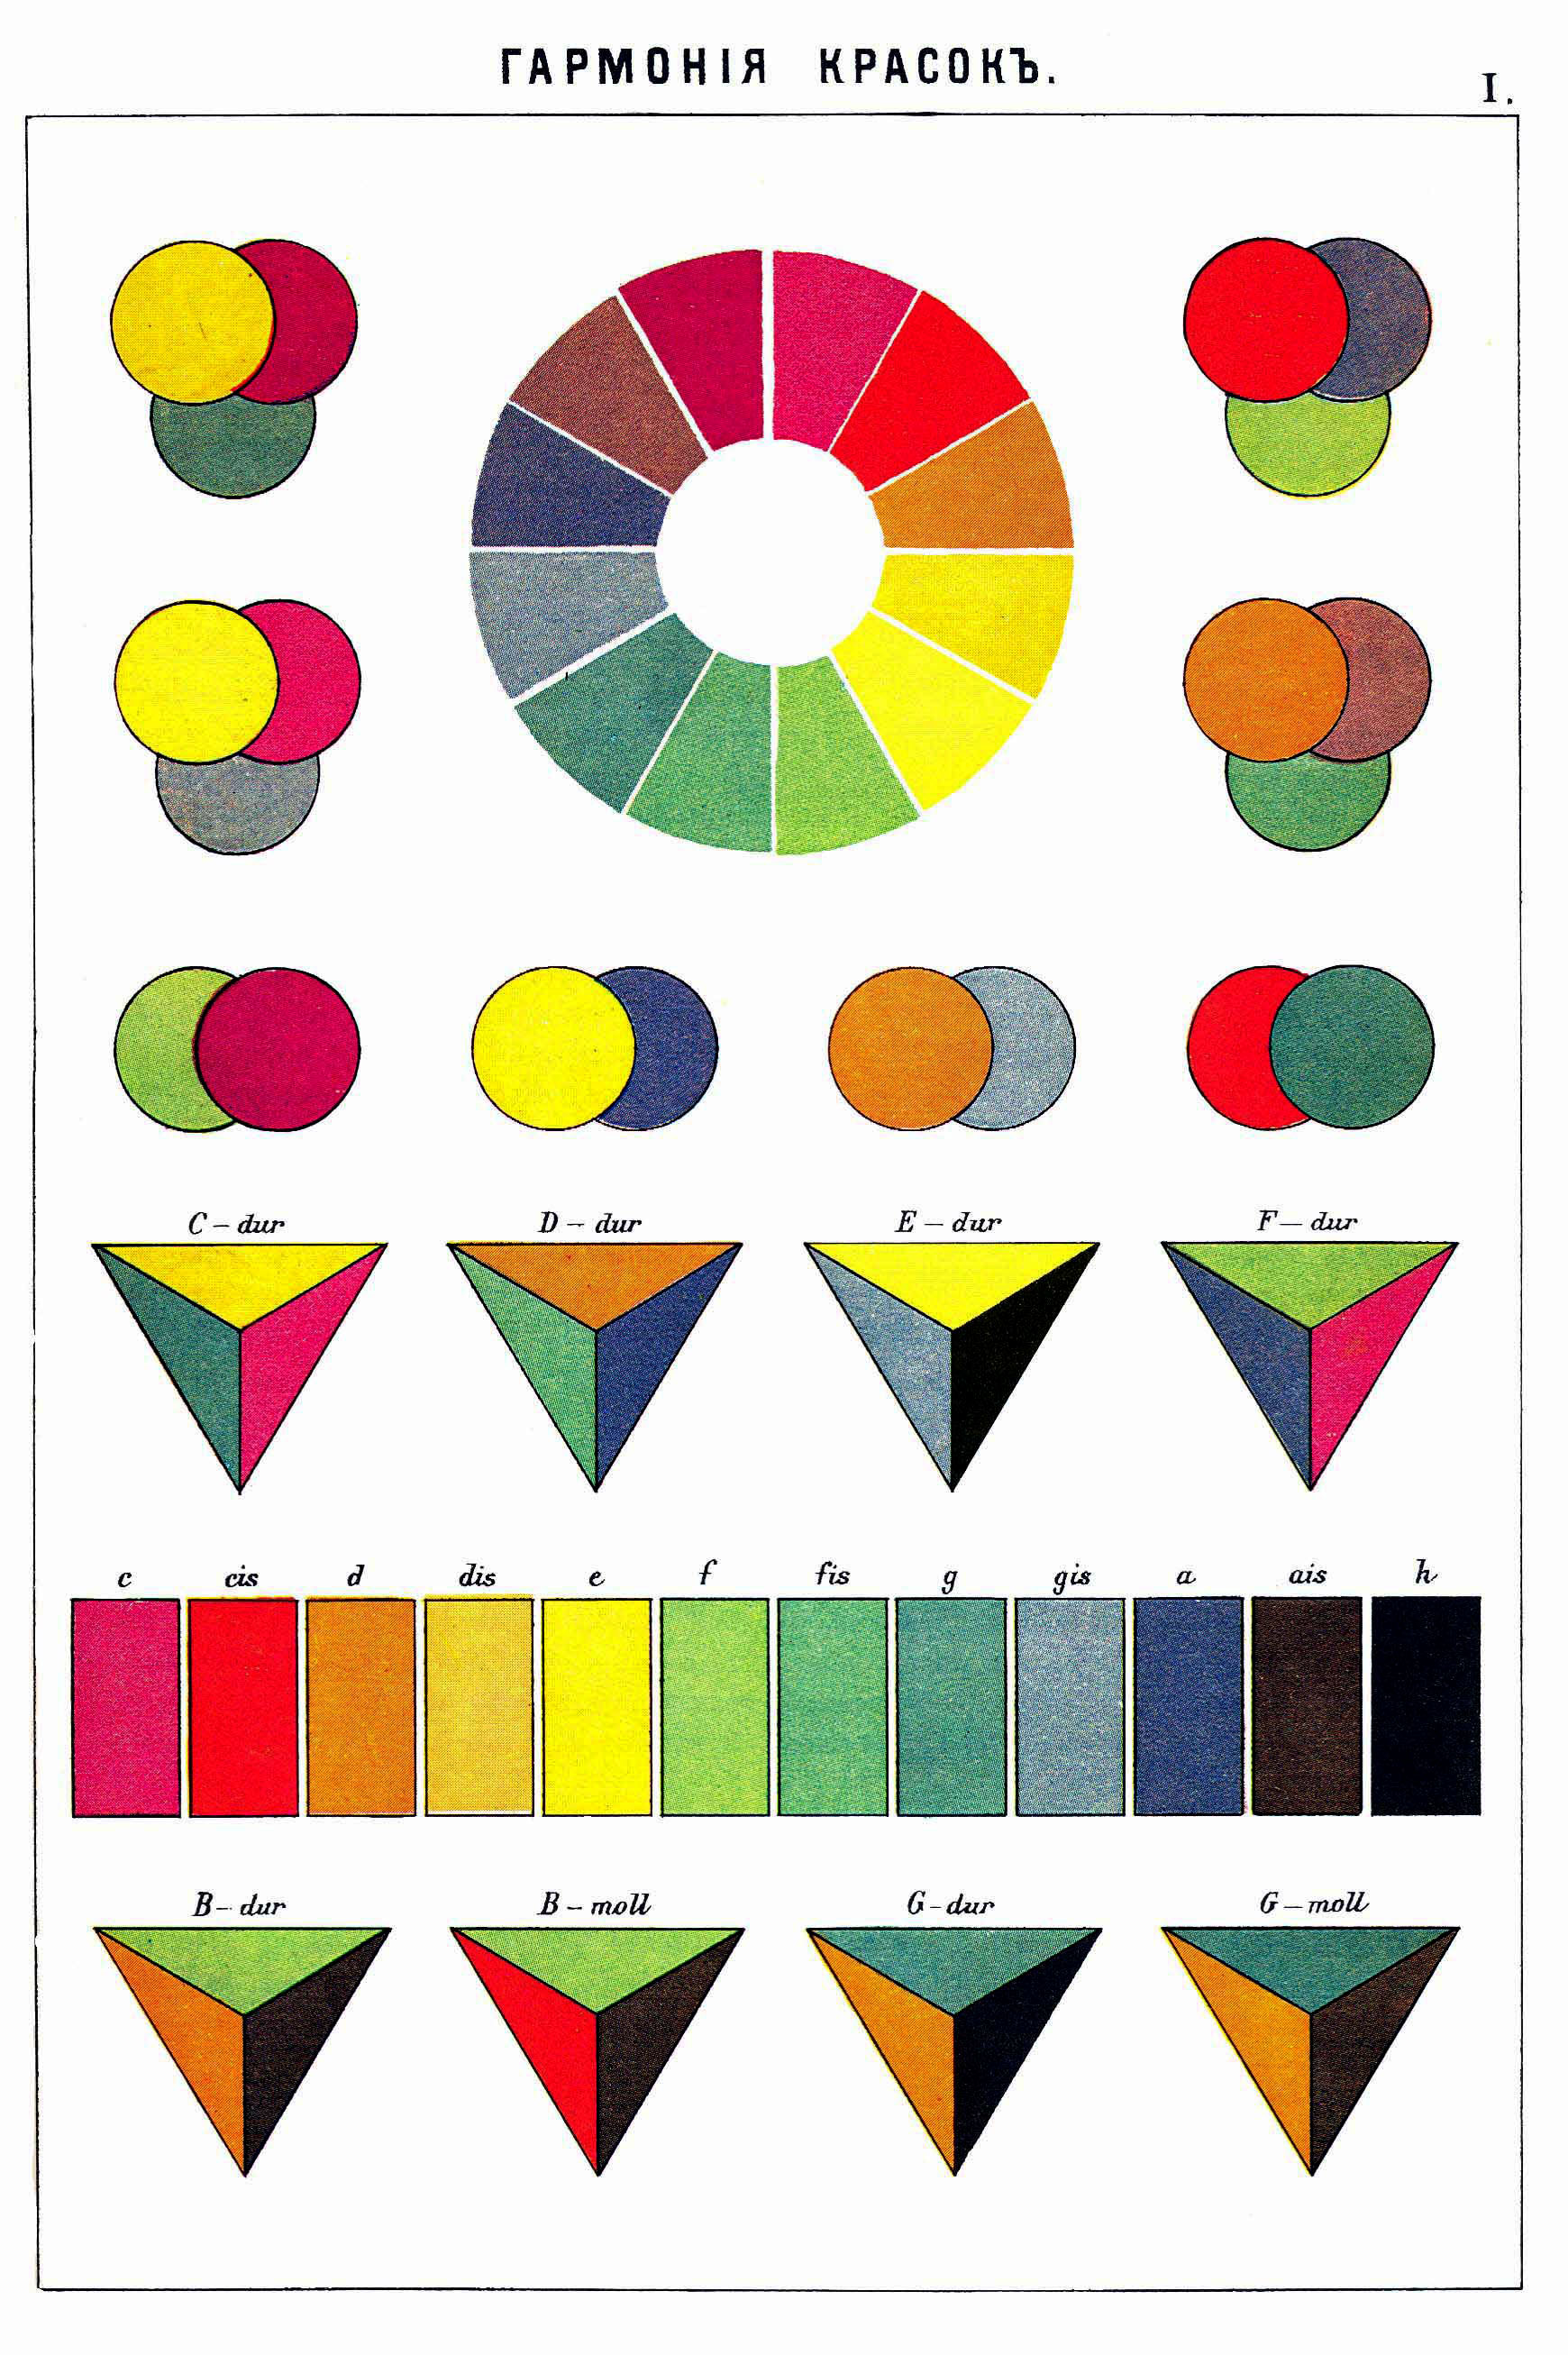 Color Wheel Chart Images – Browse 11,568 Stock Photos, Vectors